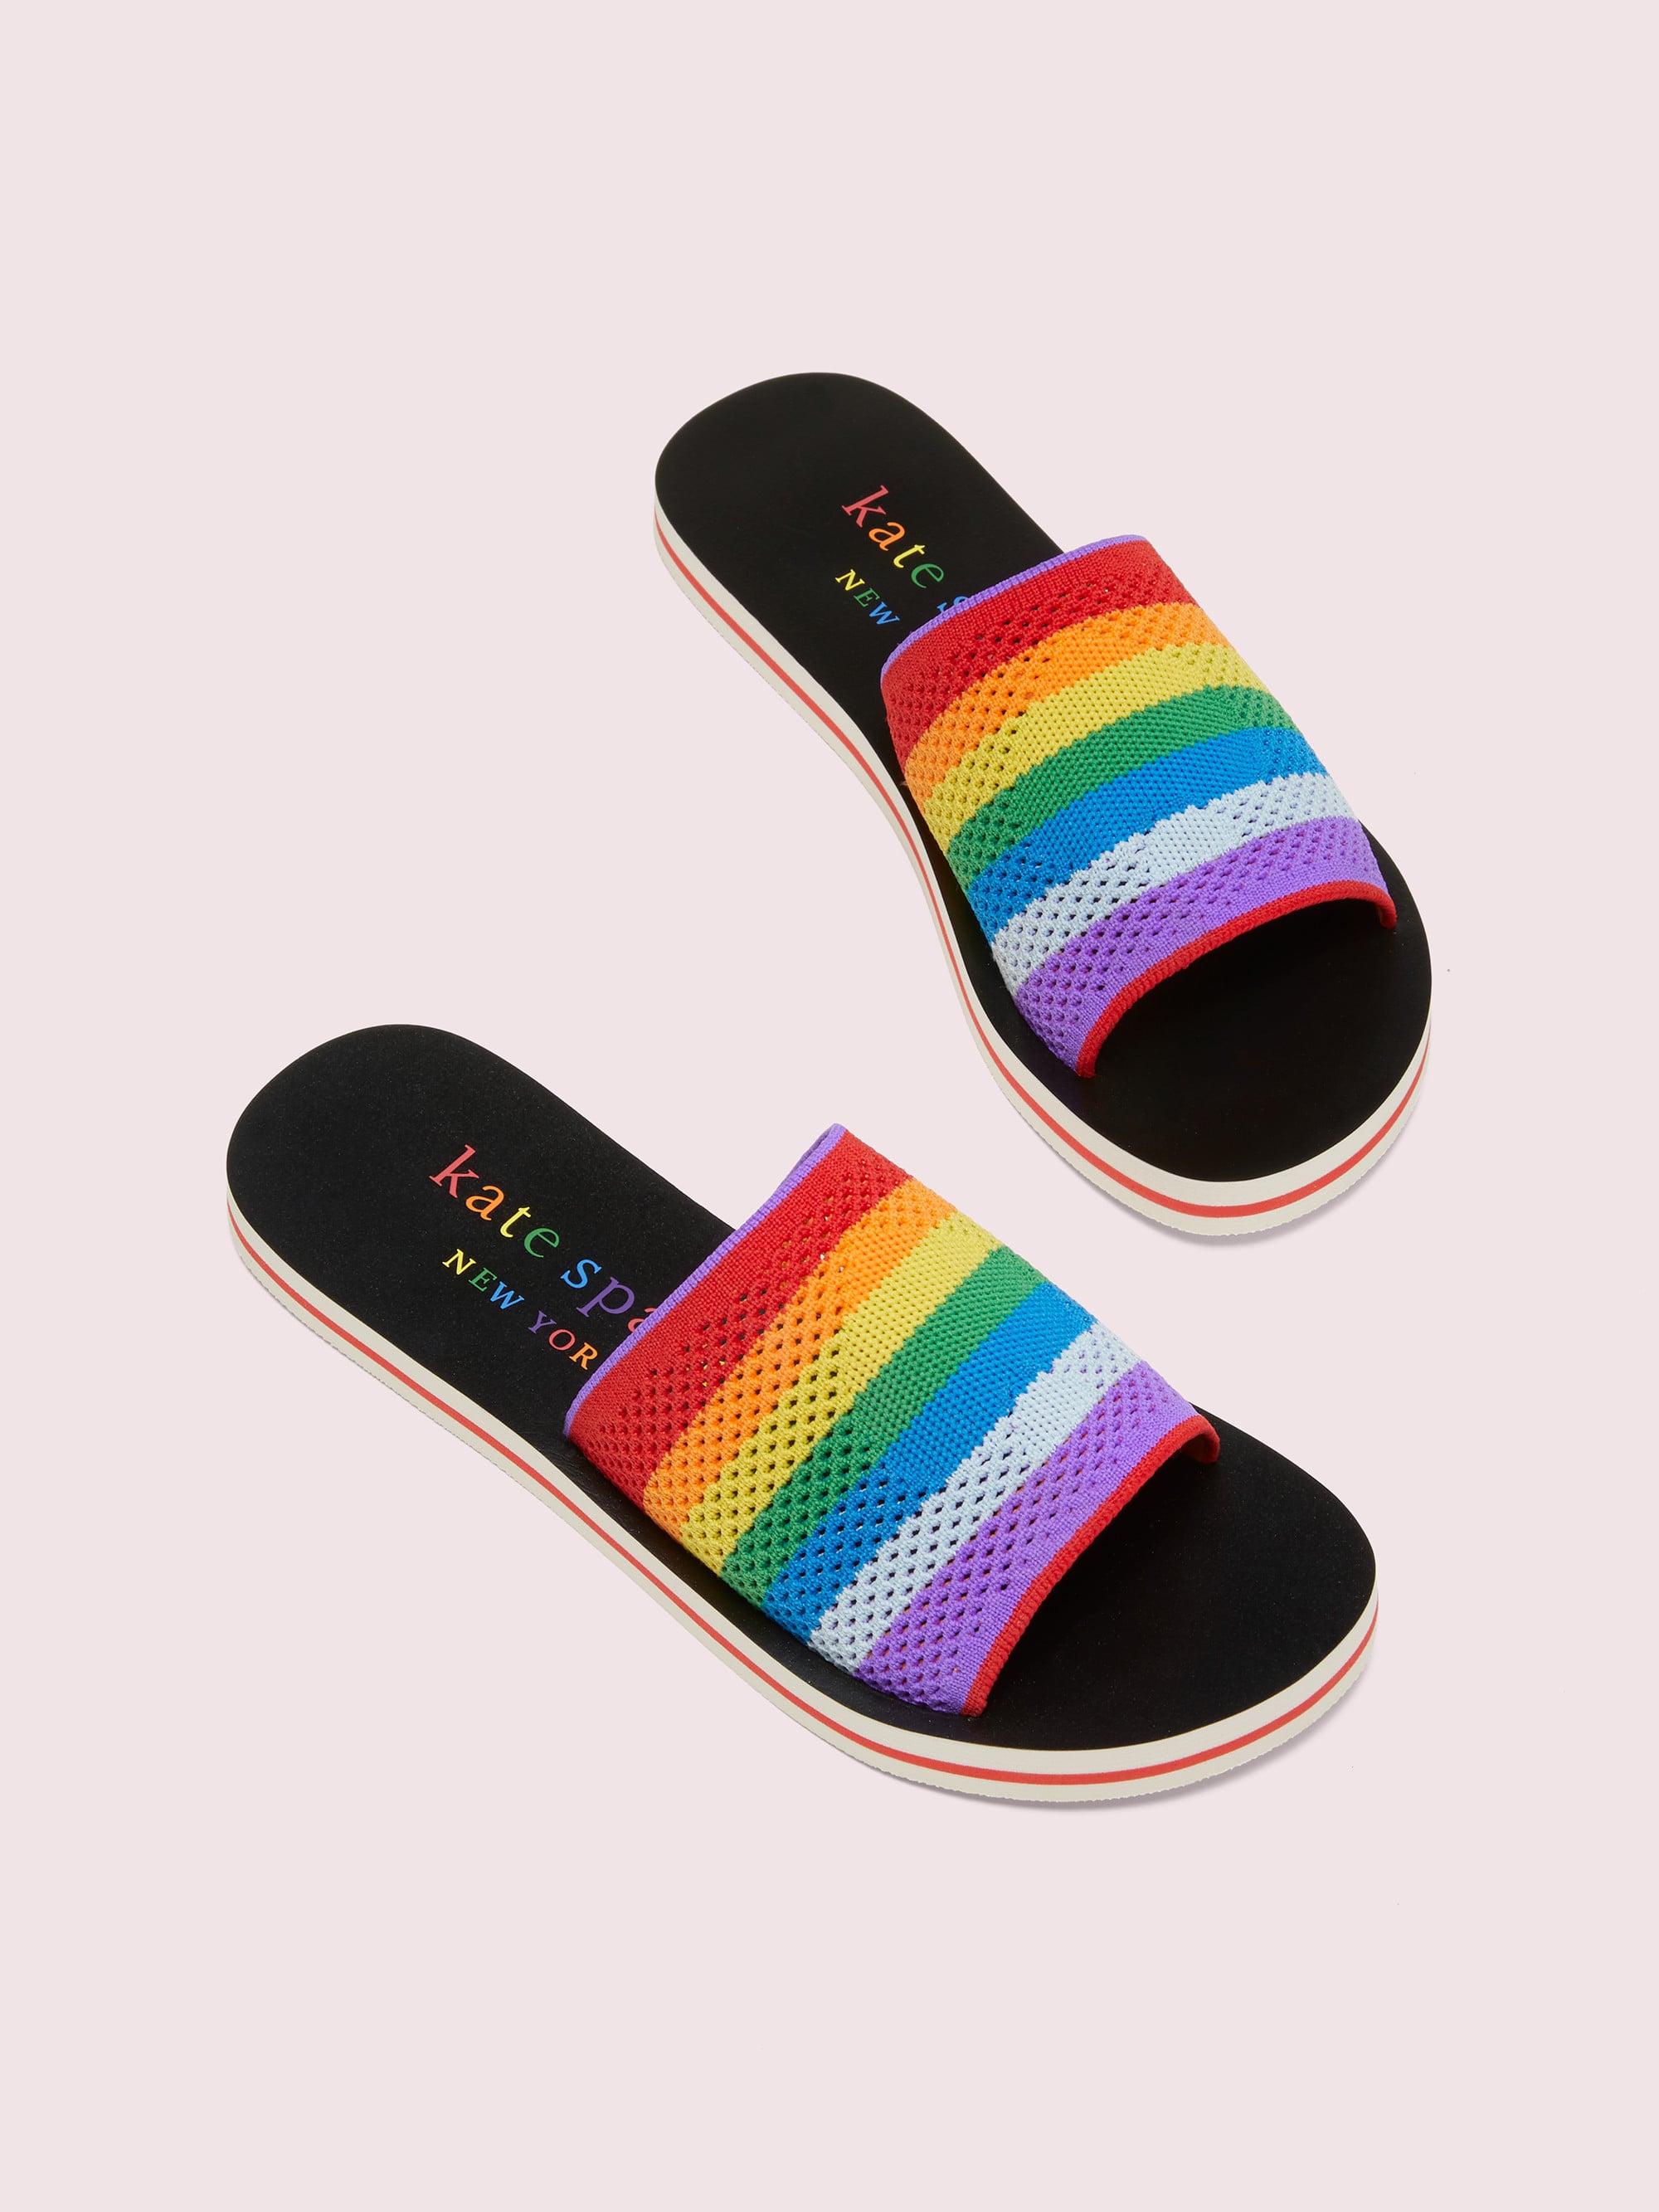 New Kate Spade Rainbow Slide Sandals 2020 | POPSUGAR Fashion